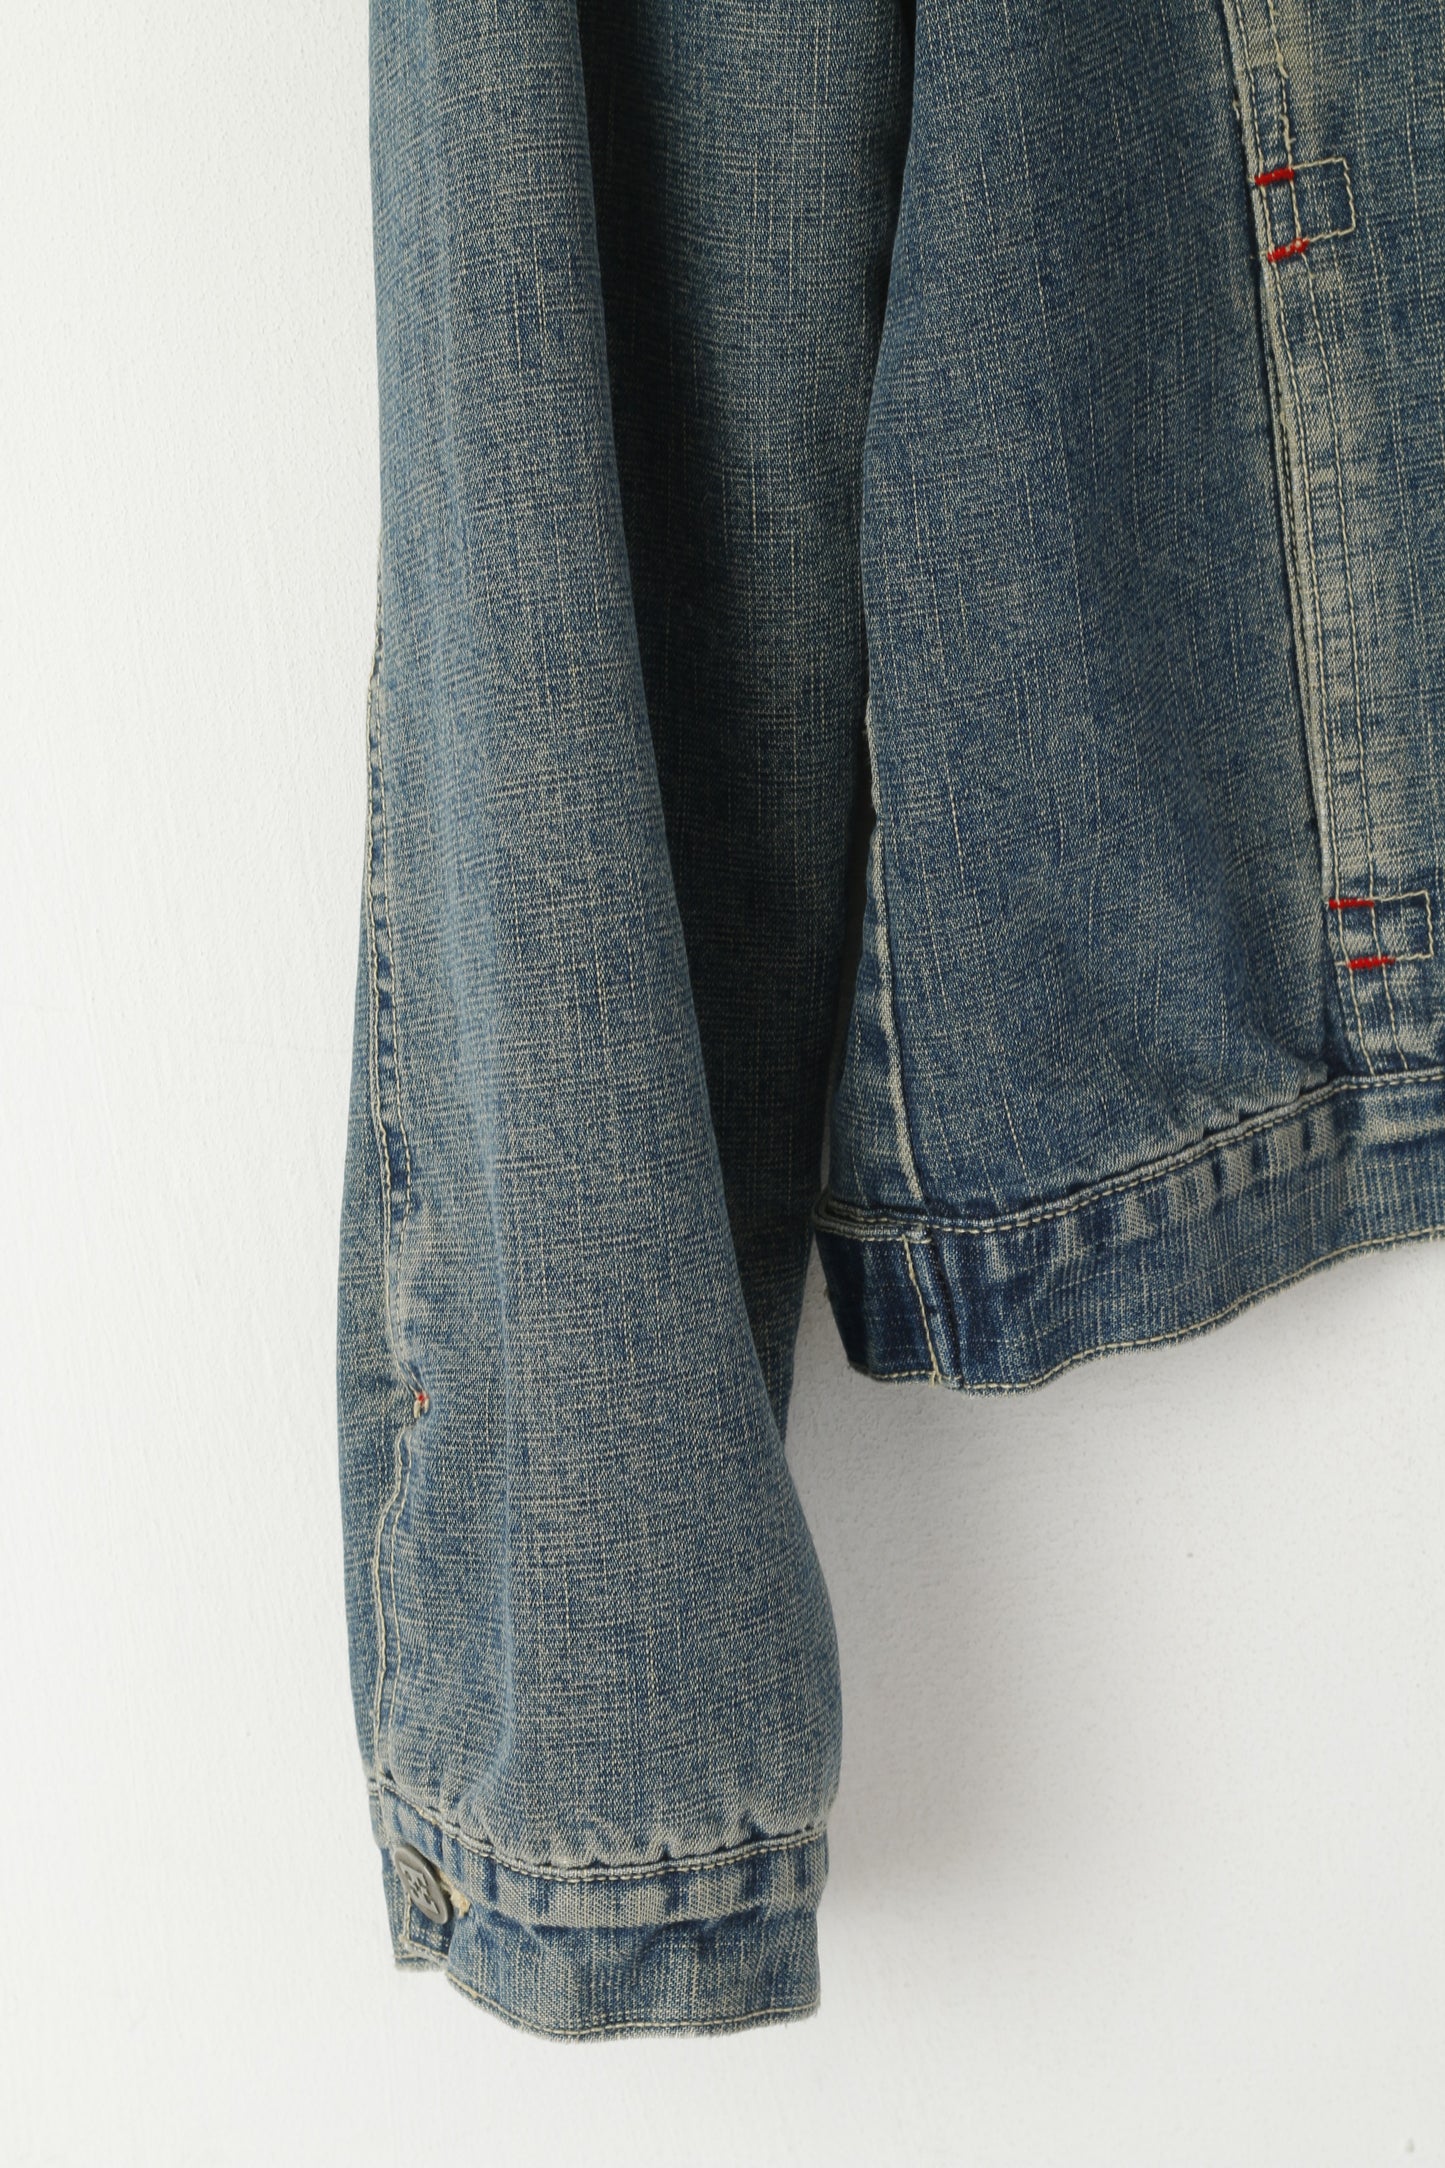 Enemy Women M Jacket Blue Cotton Denim Jeans Fur Lined Retro Single Breasted Top